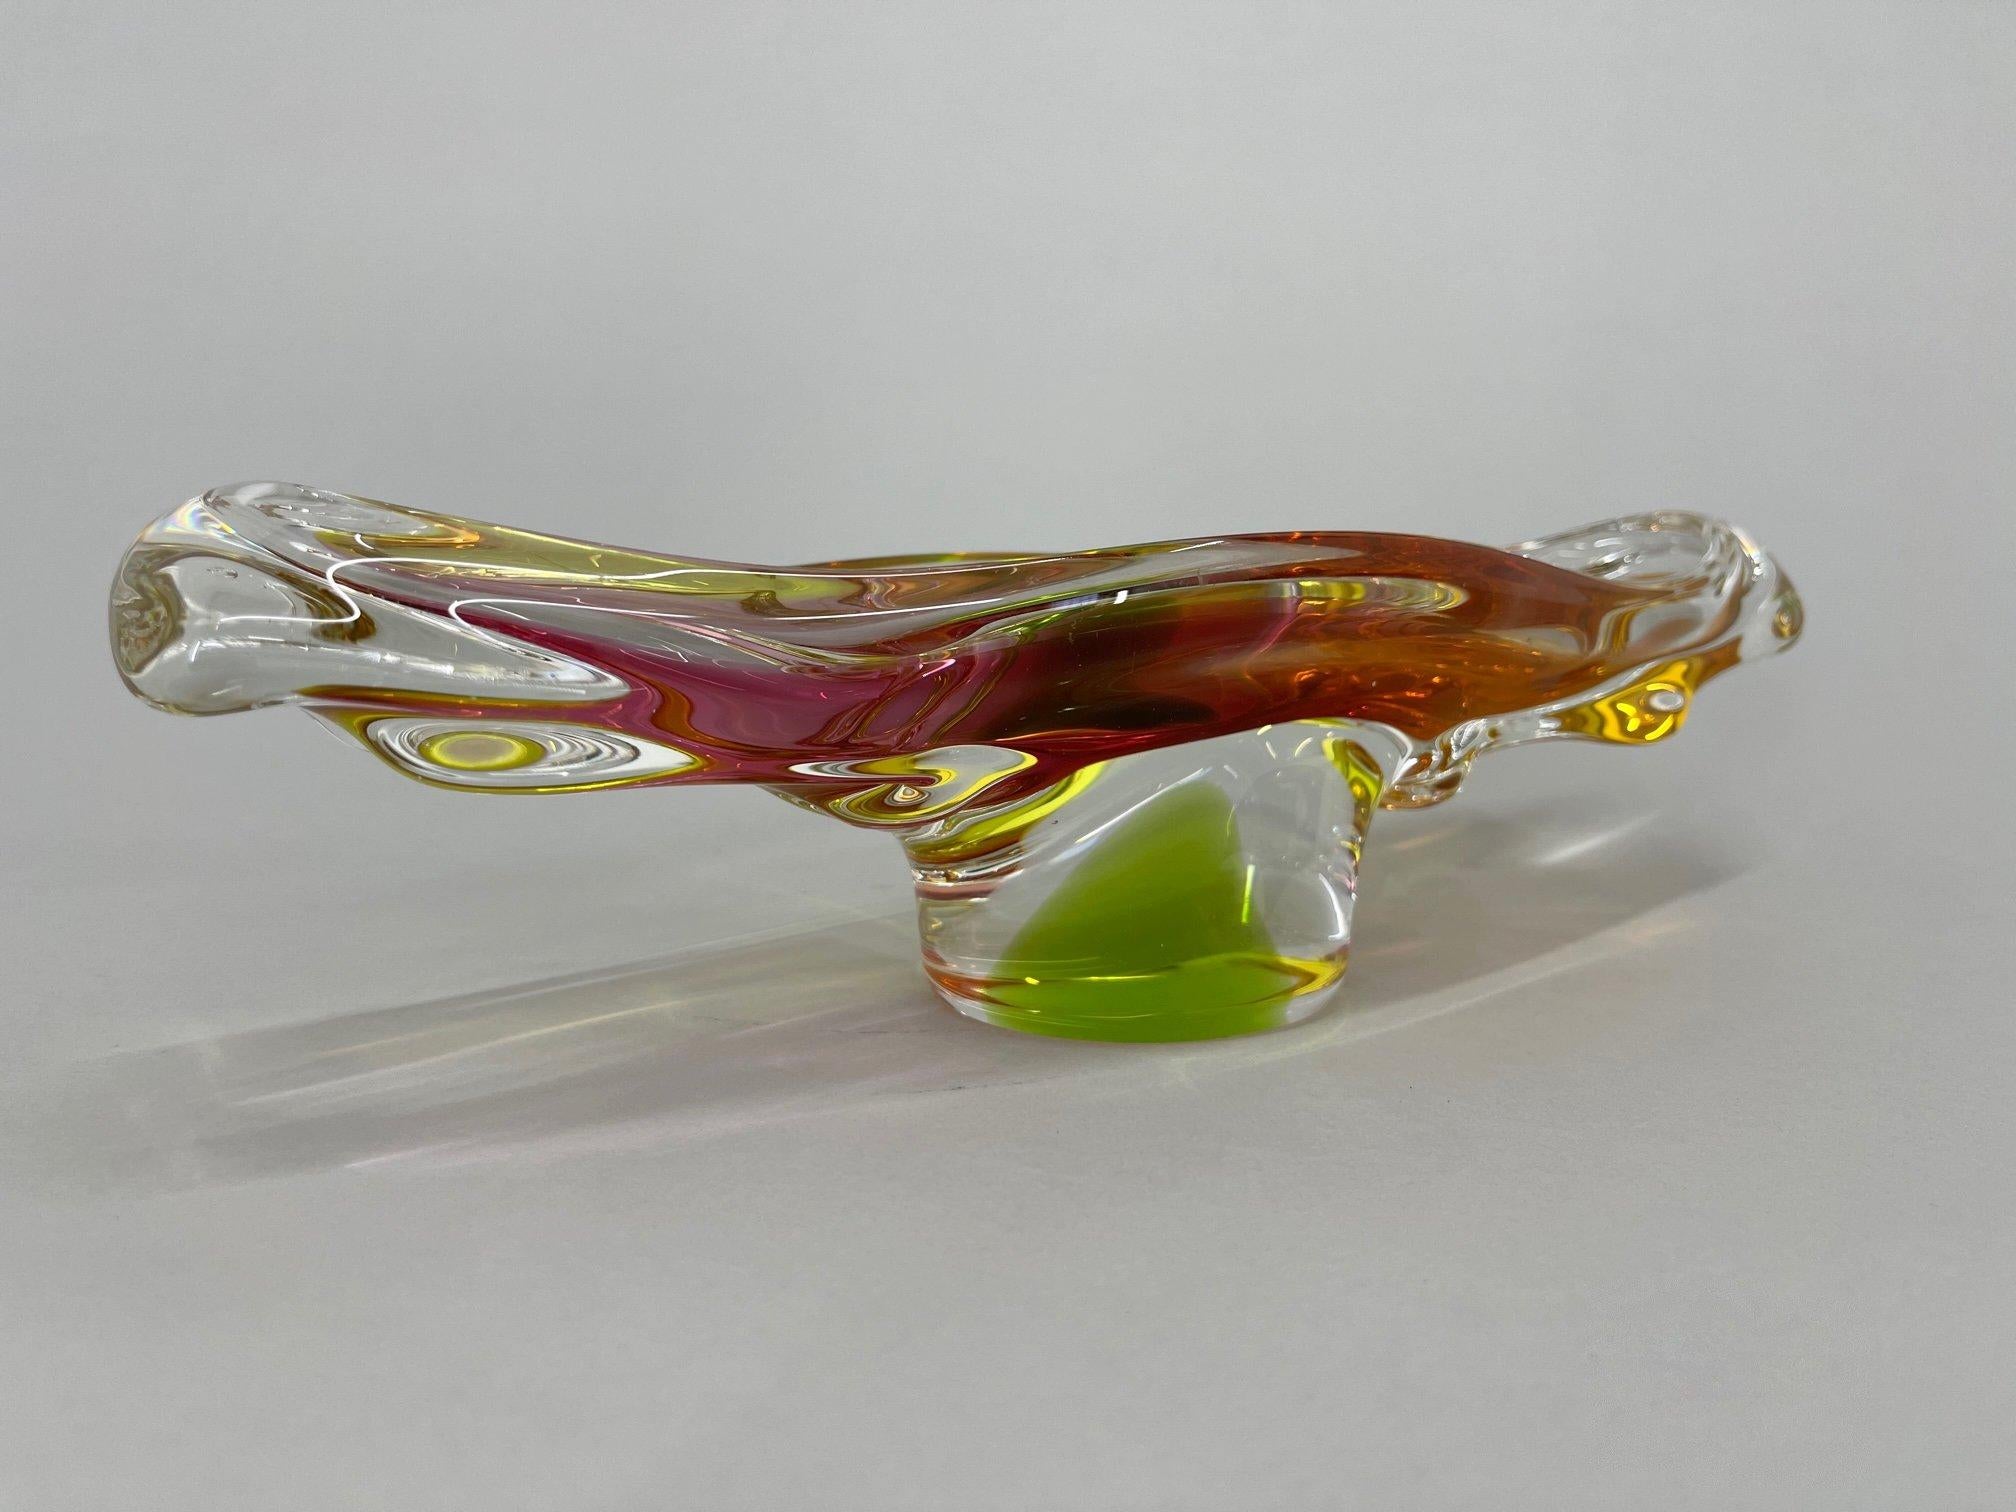 Bohemian Art glass vintage oblong bowl designed by Josef Hospodka in the 1960's. Made by Chribska Glassworks in Czechoslovakia.